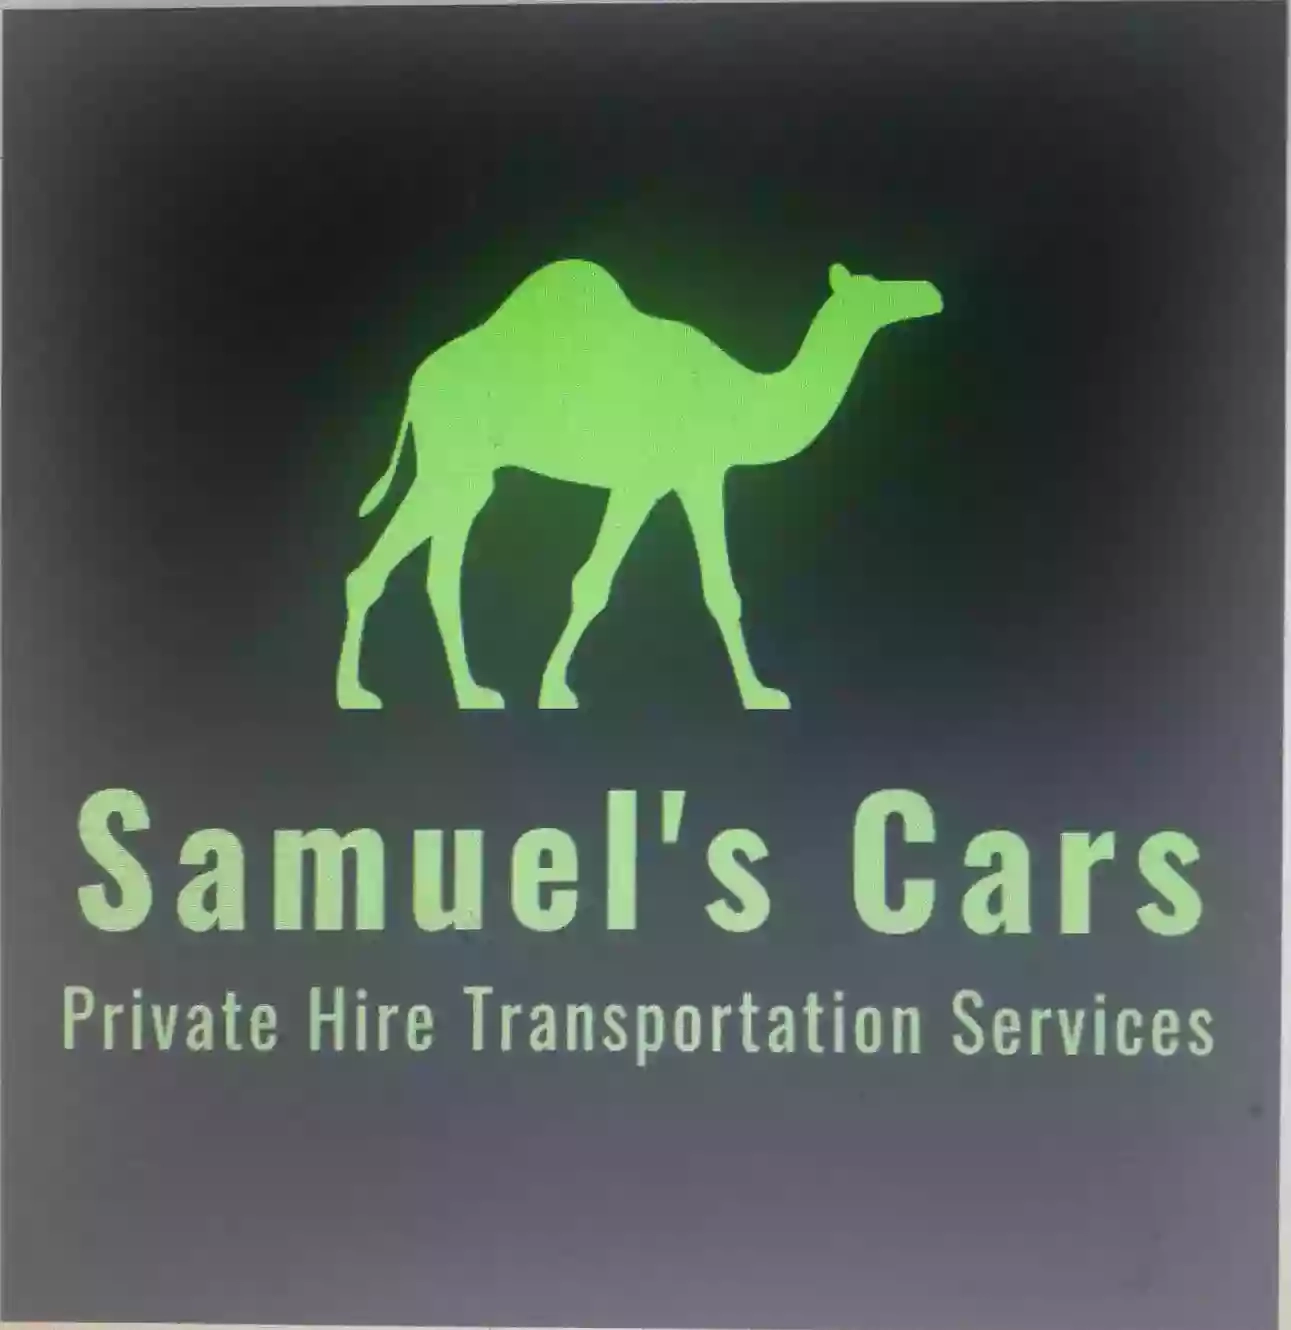 Samuel's Cars Airport Travel